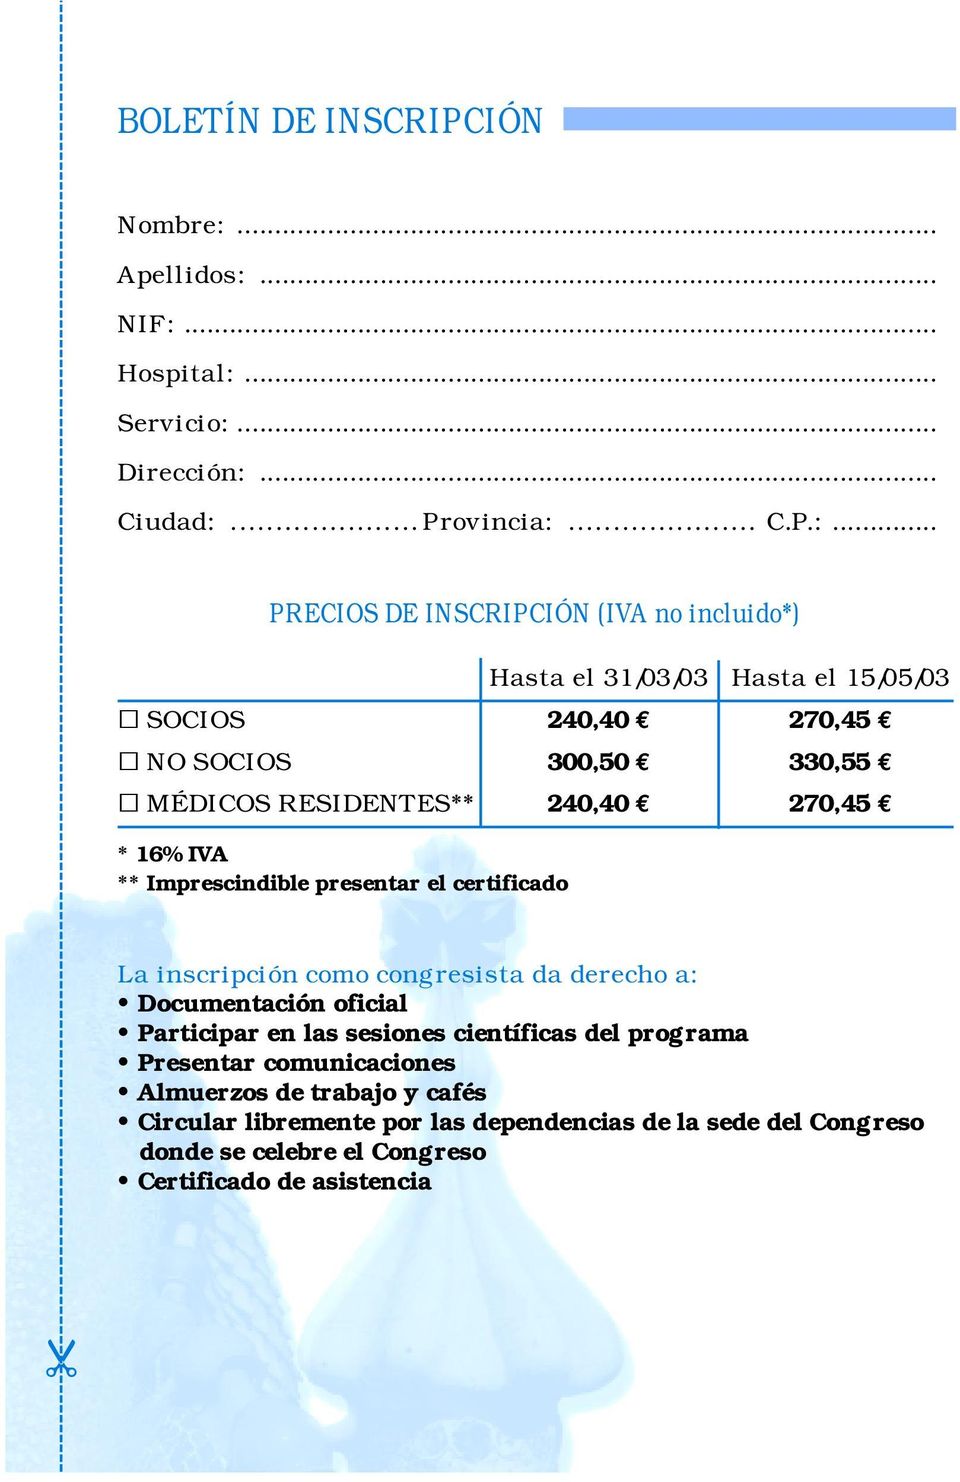 MÉDICOS RESIDENTES** 240,40 270,45 * 16% IVA ** Imprescindible presentar el certificado La inscripción como congresista da derecho a: Documentación oficial